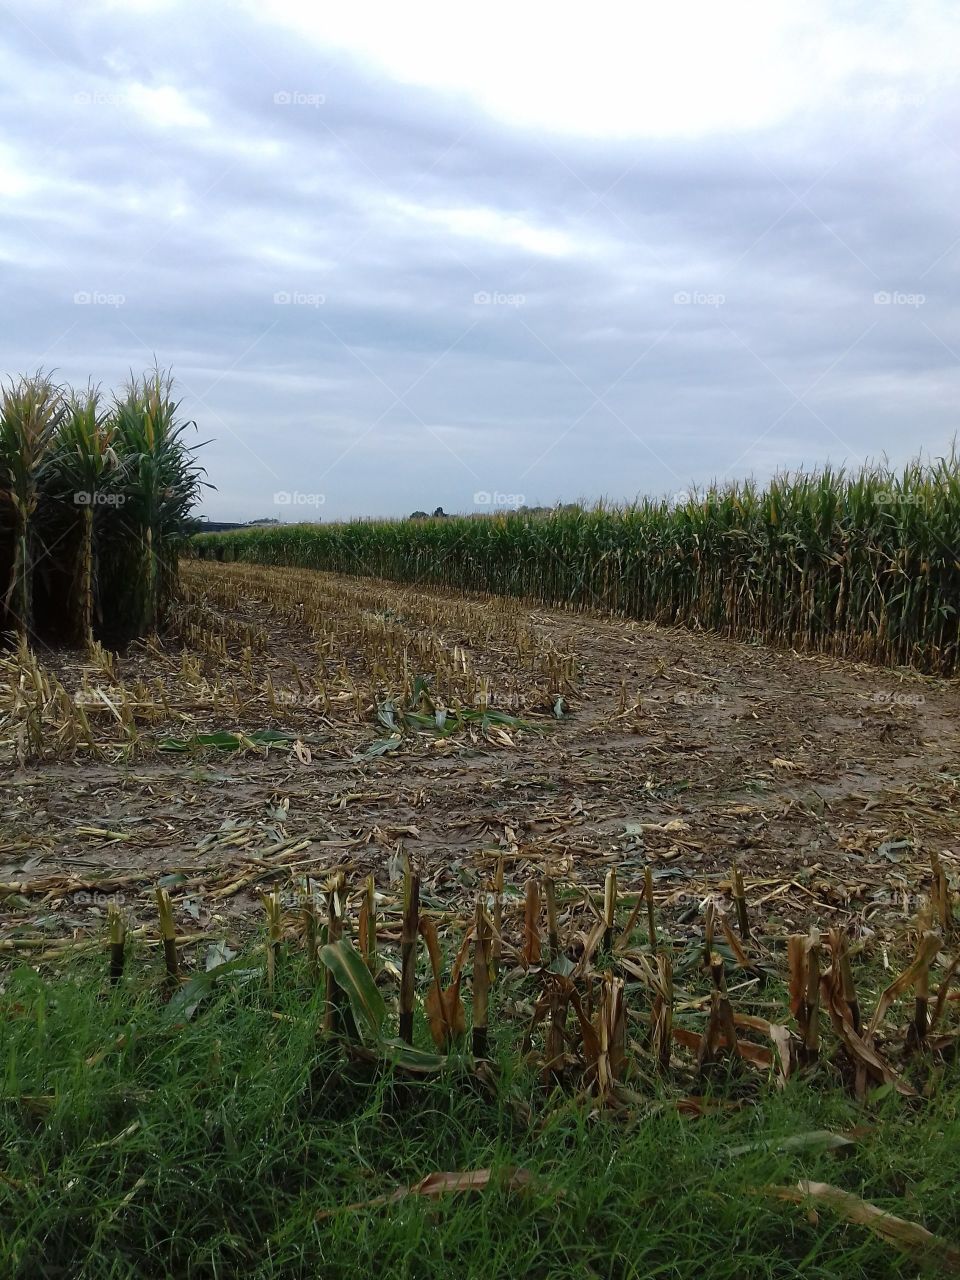 corn path